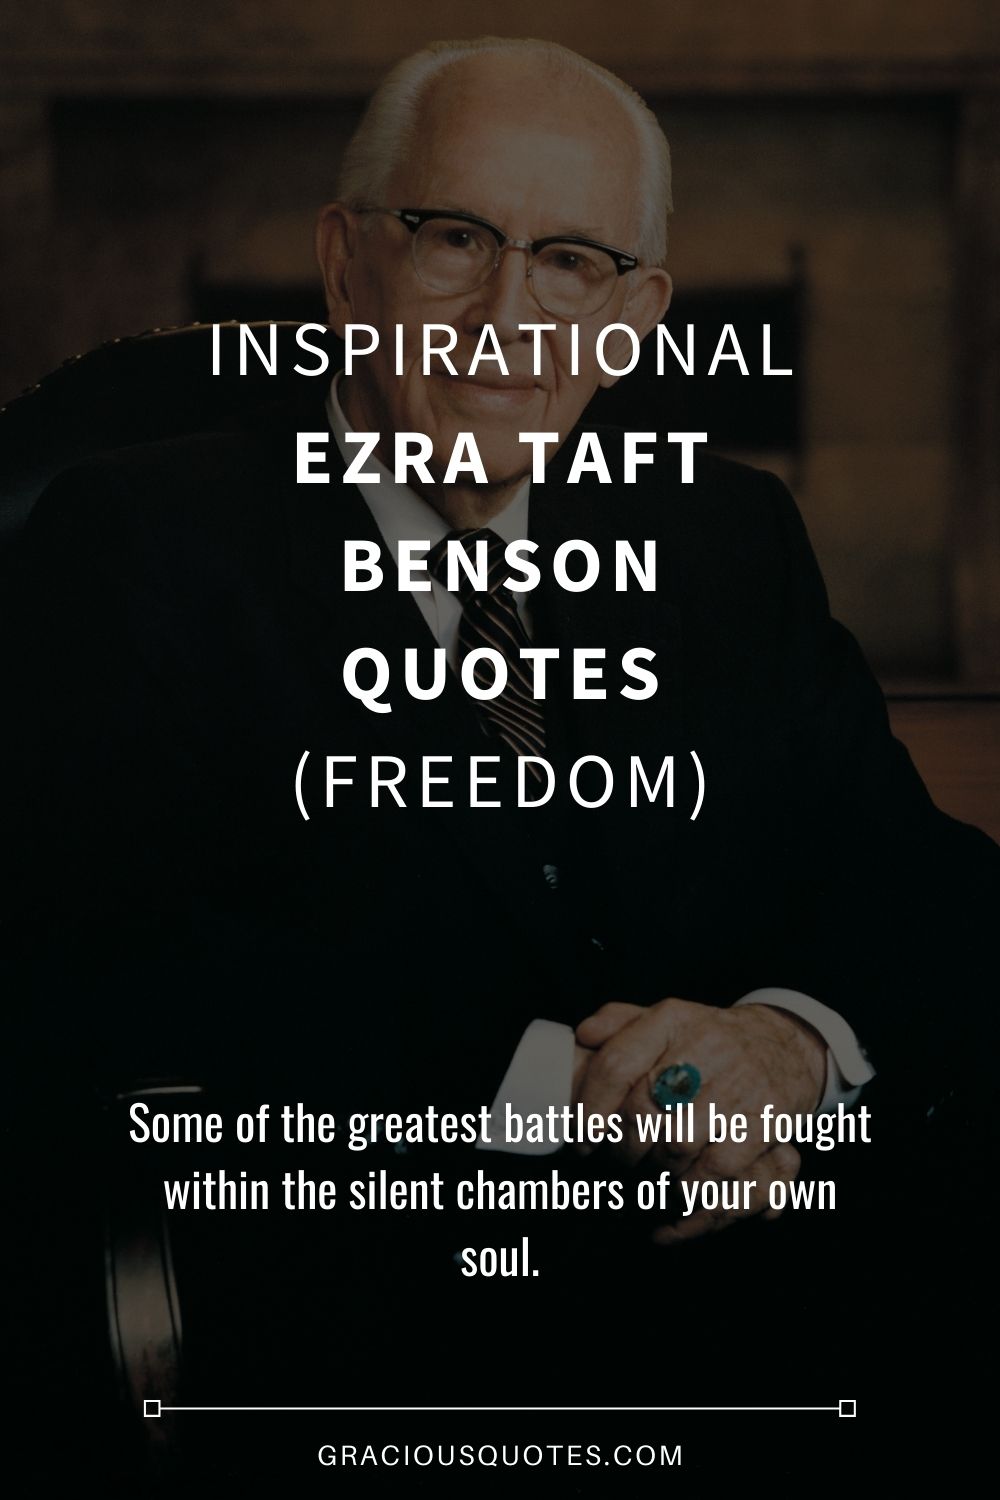 Inspirational Ezra Taft Benson Quotes (FREEDOM) - Gracious Quotes